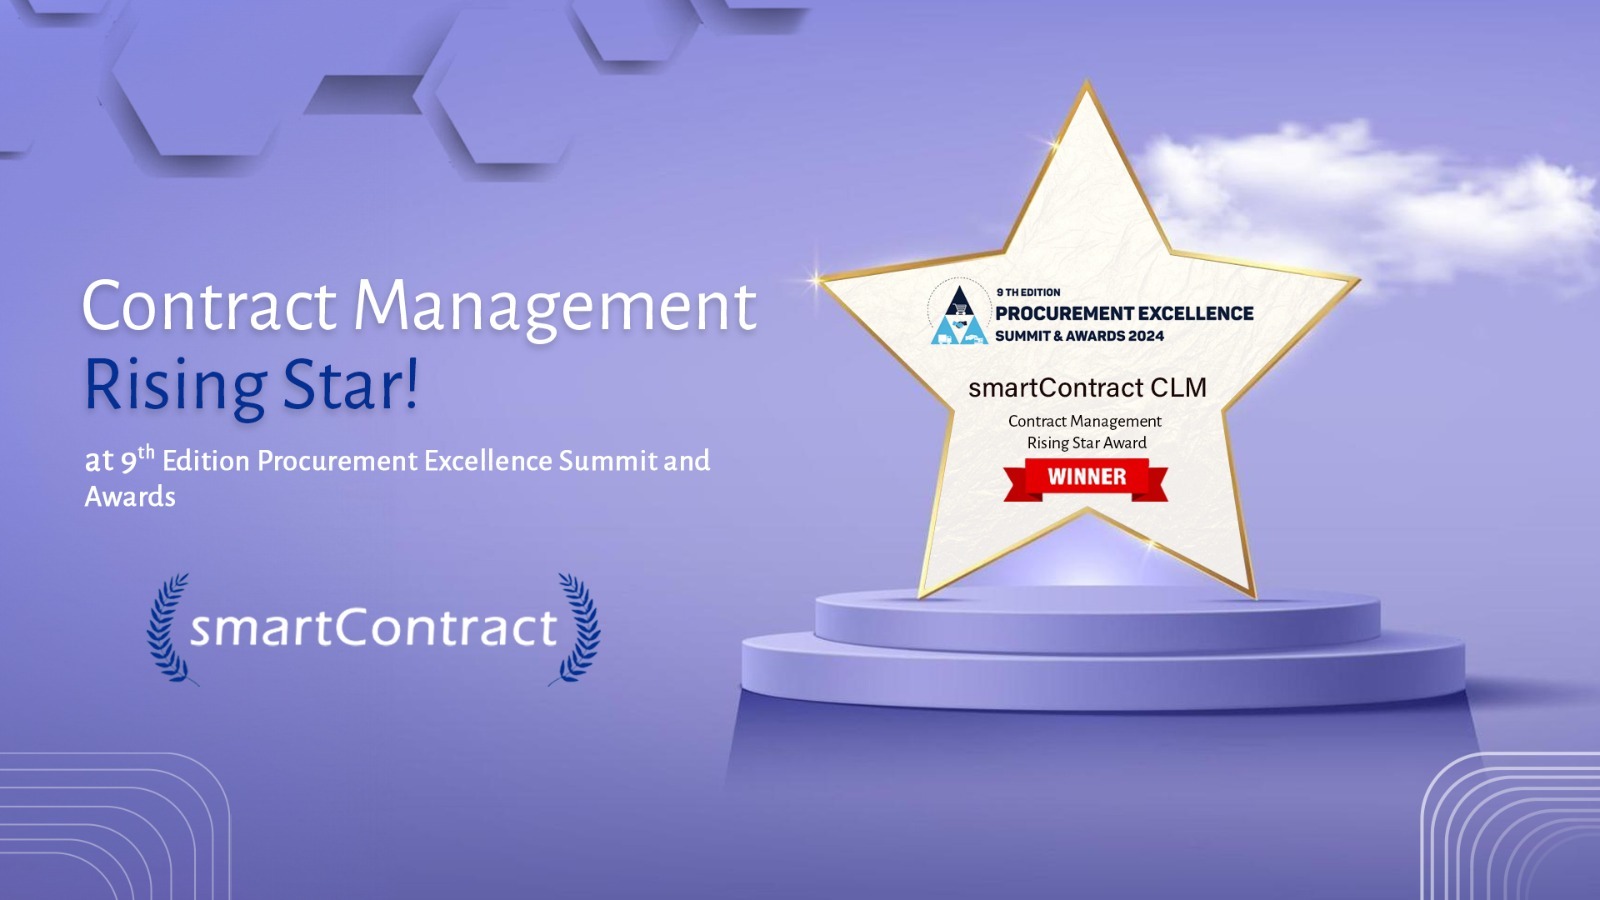 Contract Management Rising Star Award